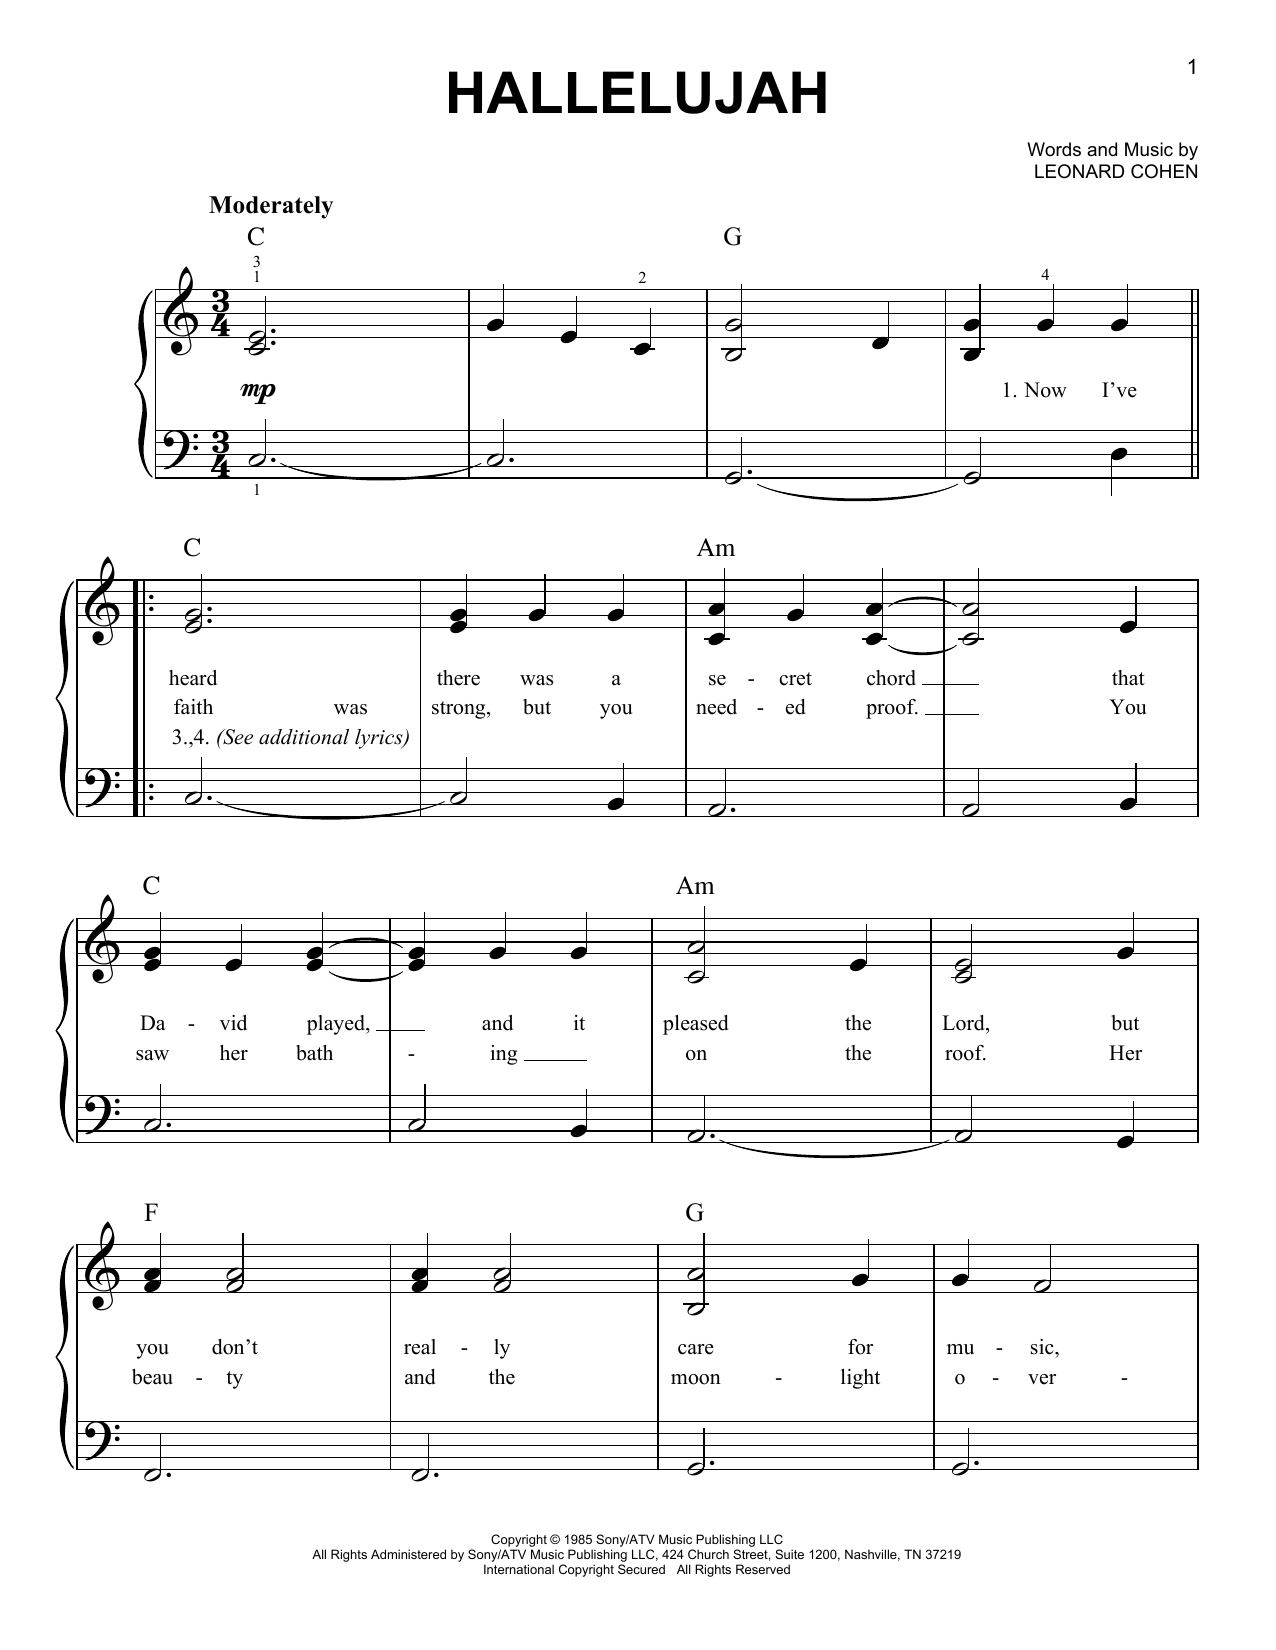 Hallelujah (Easy Piano) - Print Sheet Music Now - Hallelujah Easy Piano Sheet Music Free Printable